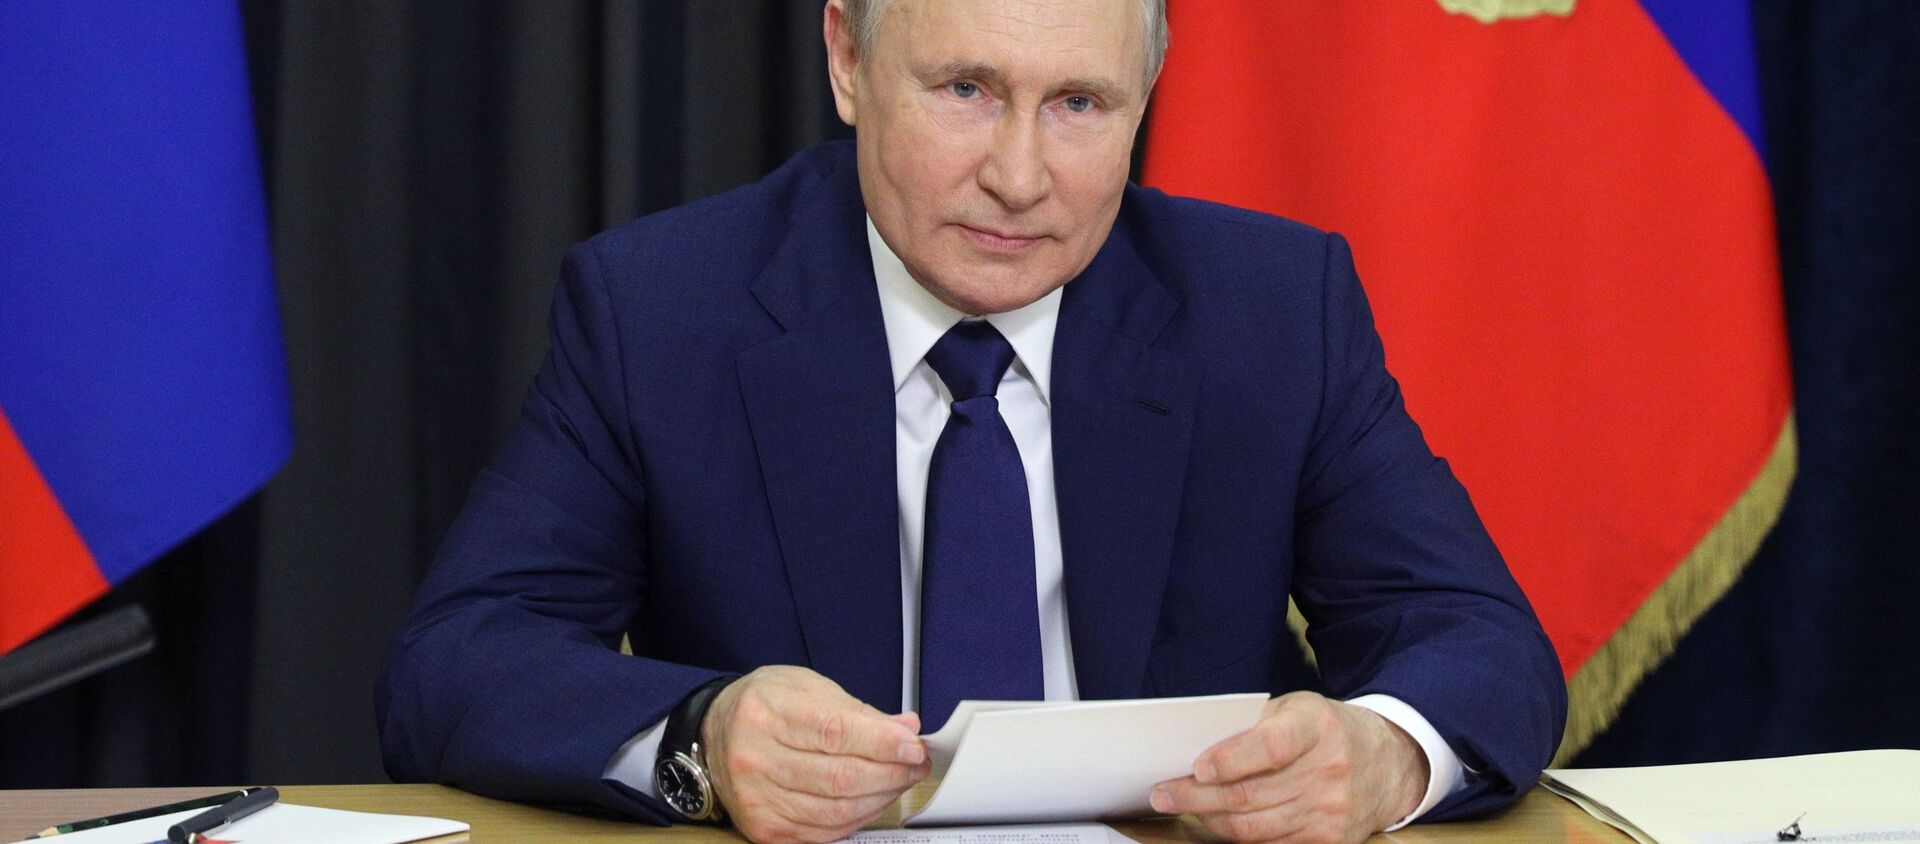 Tổng thống Nga Vladimir Putin. - Sputnik Việt Nam, 1920, 10.06.2021